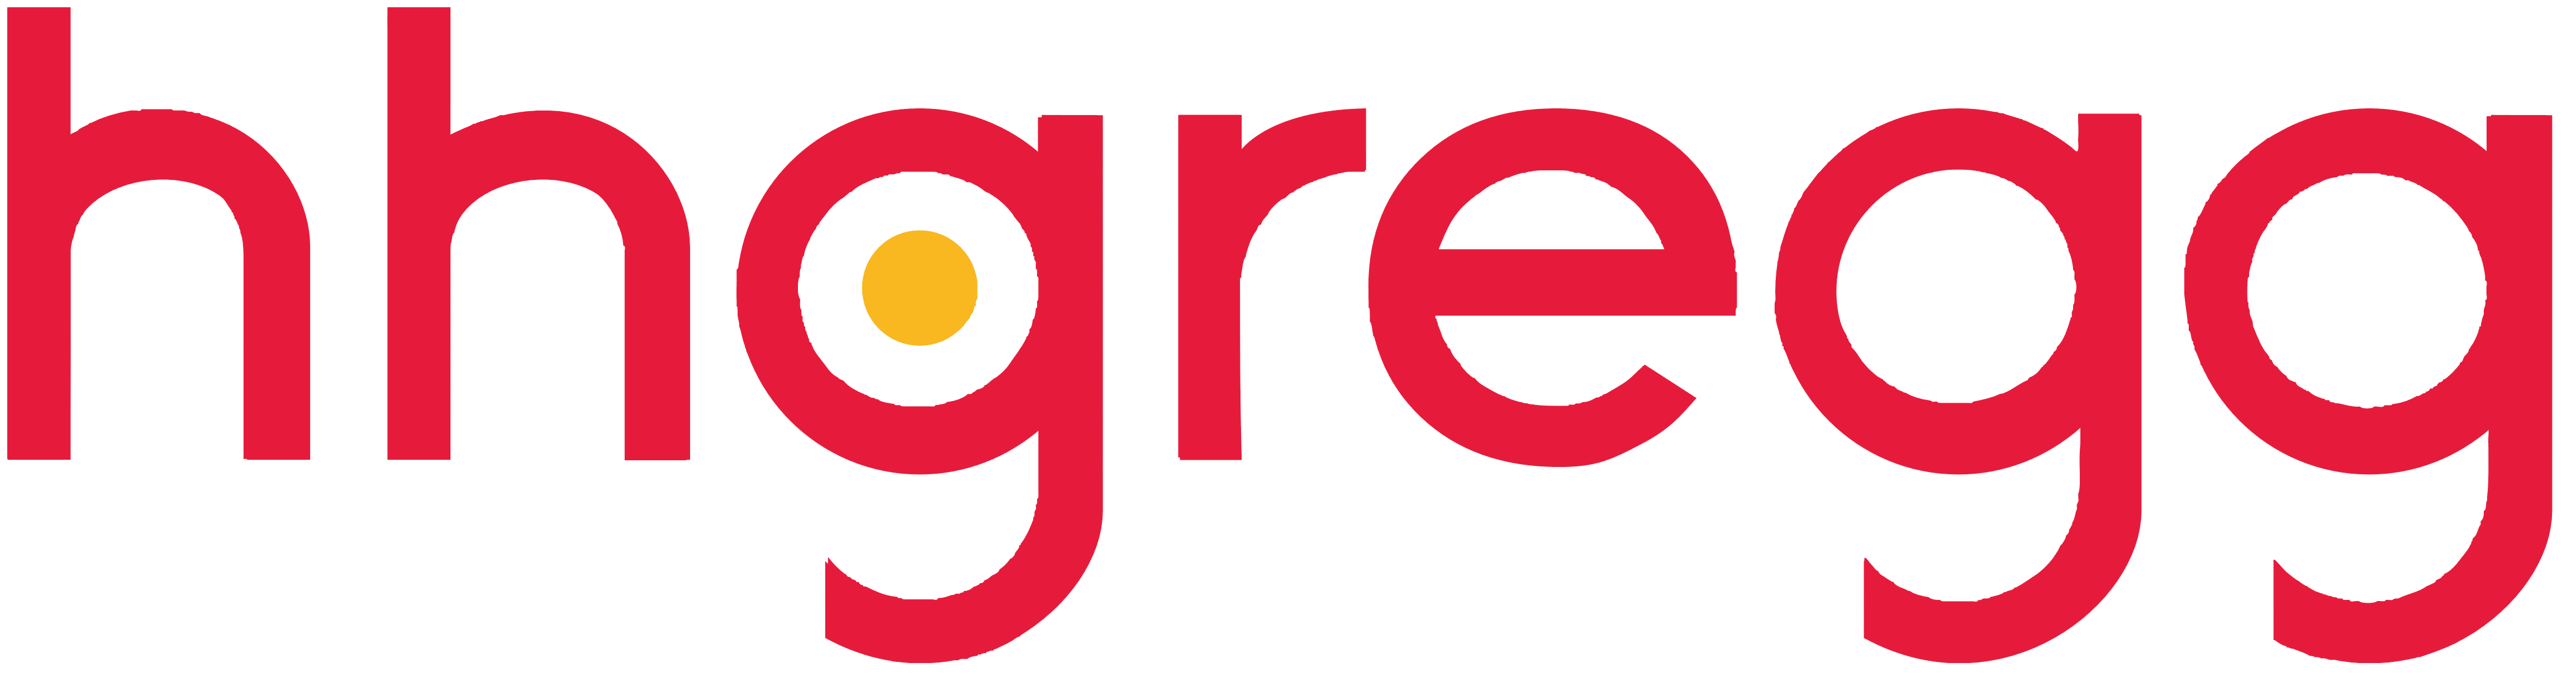 Hhgregg logo, logotype